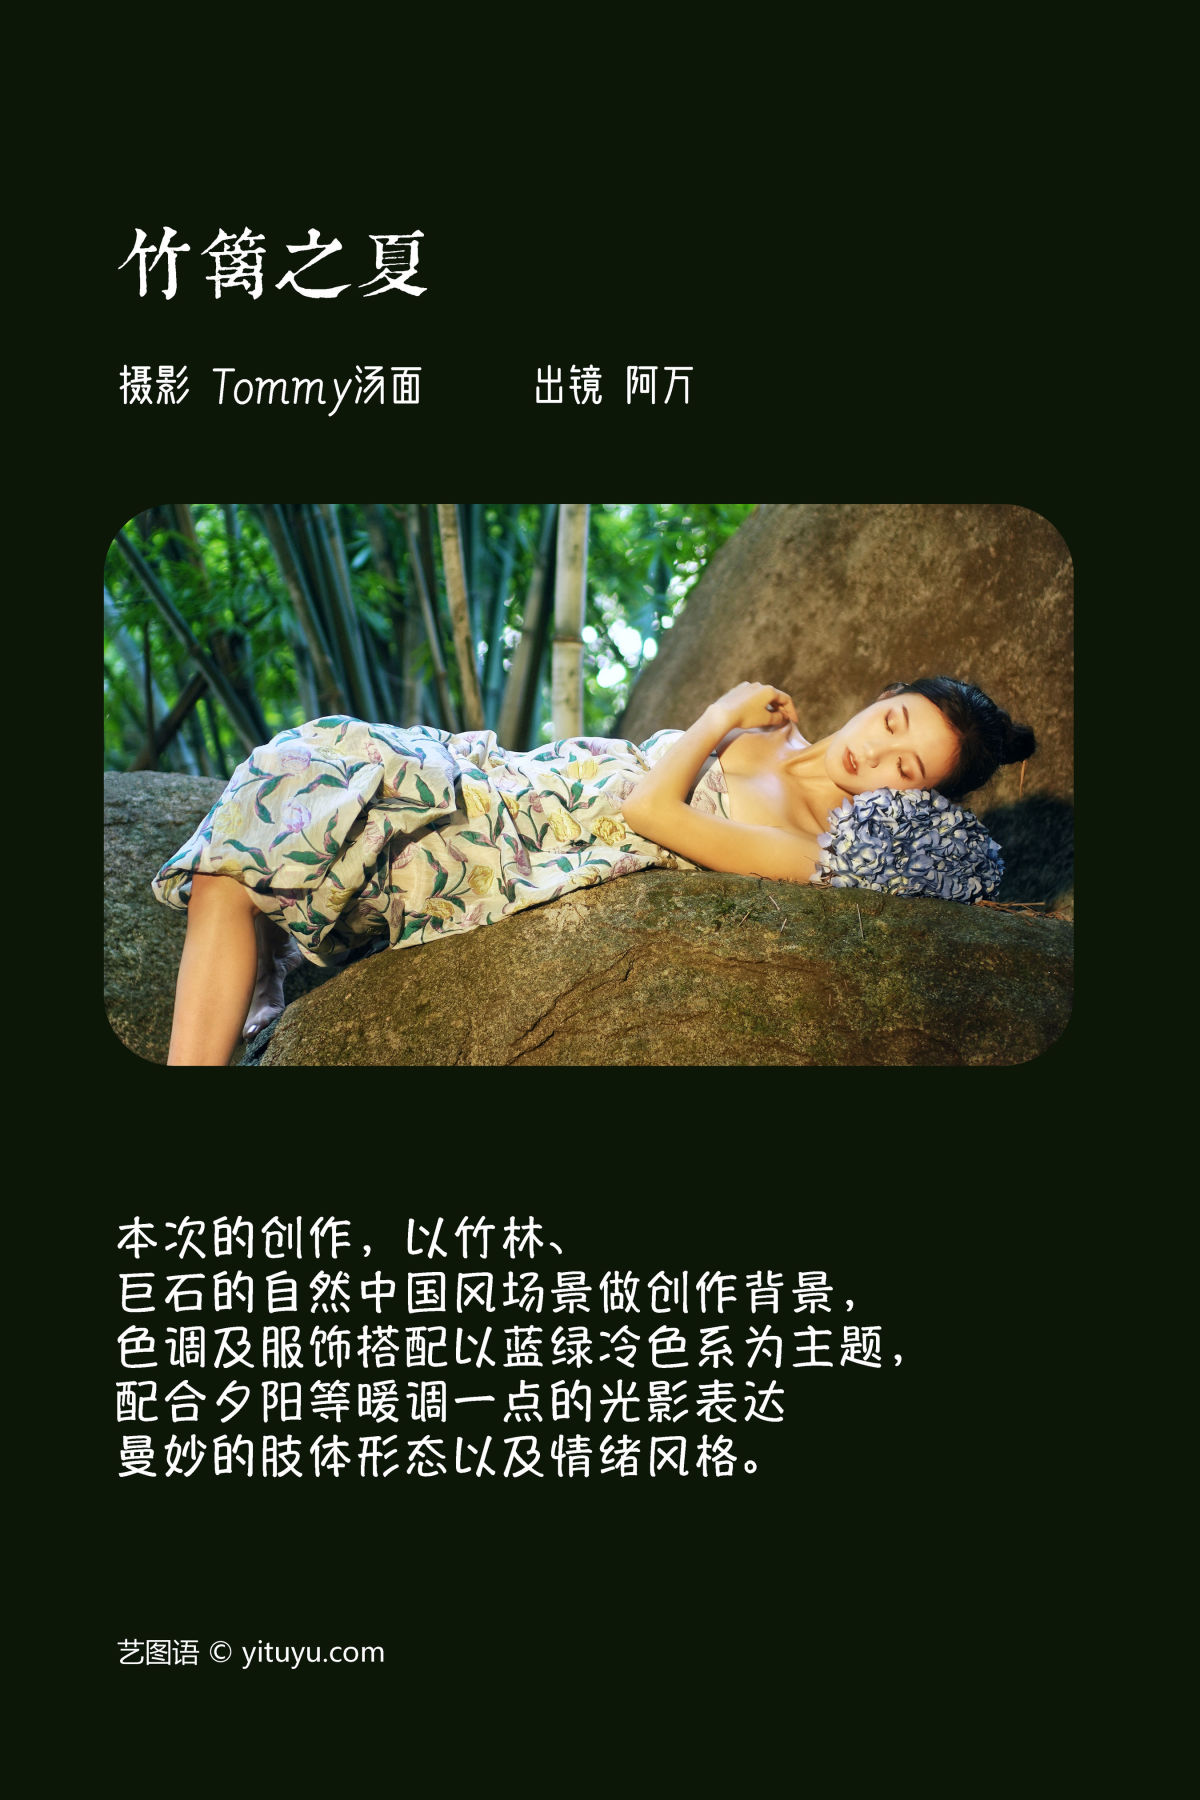 Tommy汤面_o1ne万《竹篱之夏》美图作品图片2